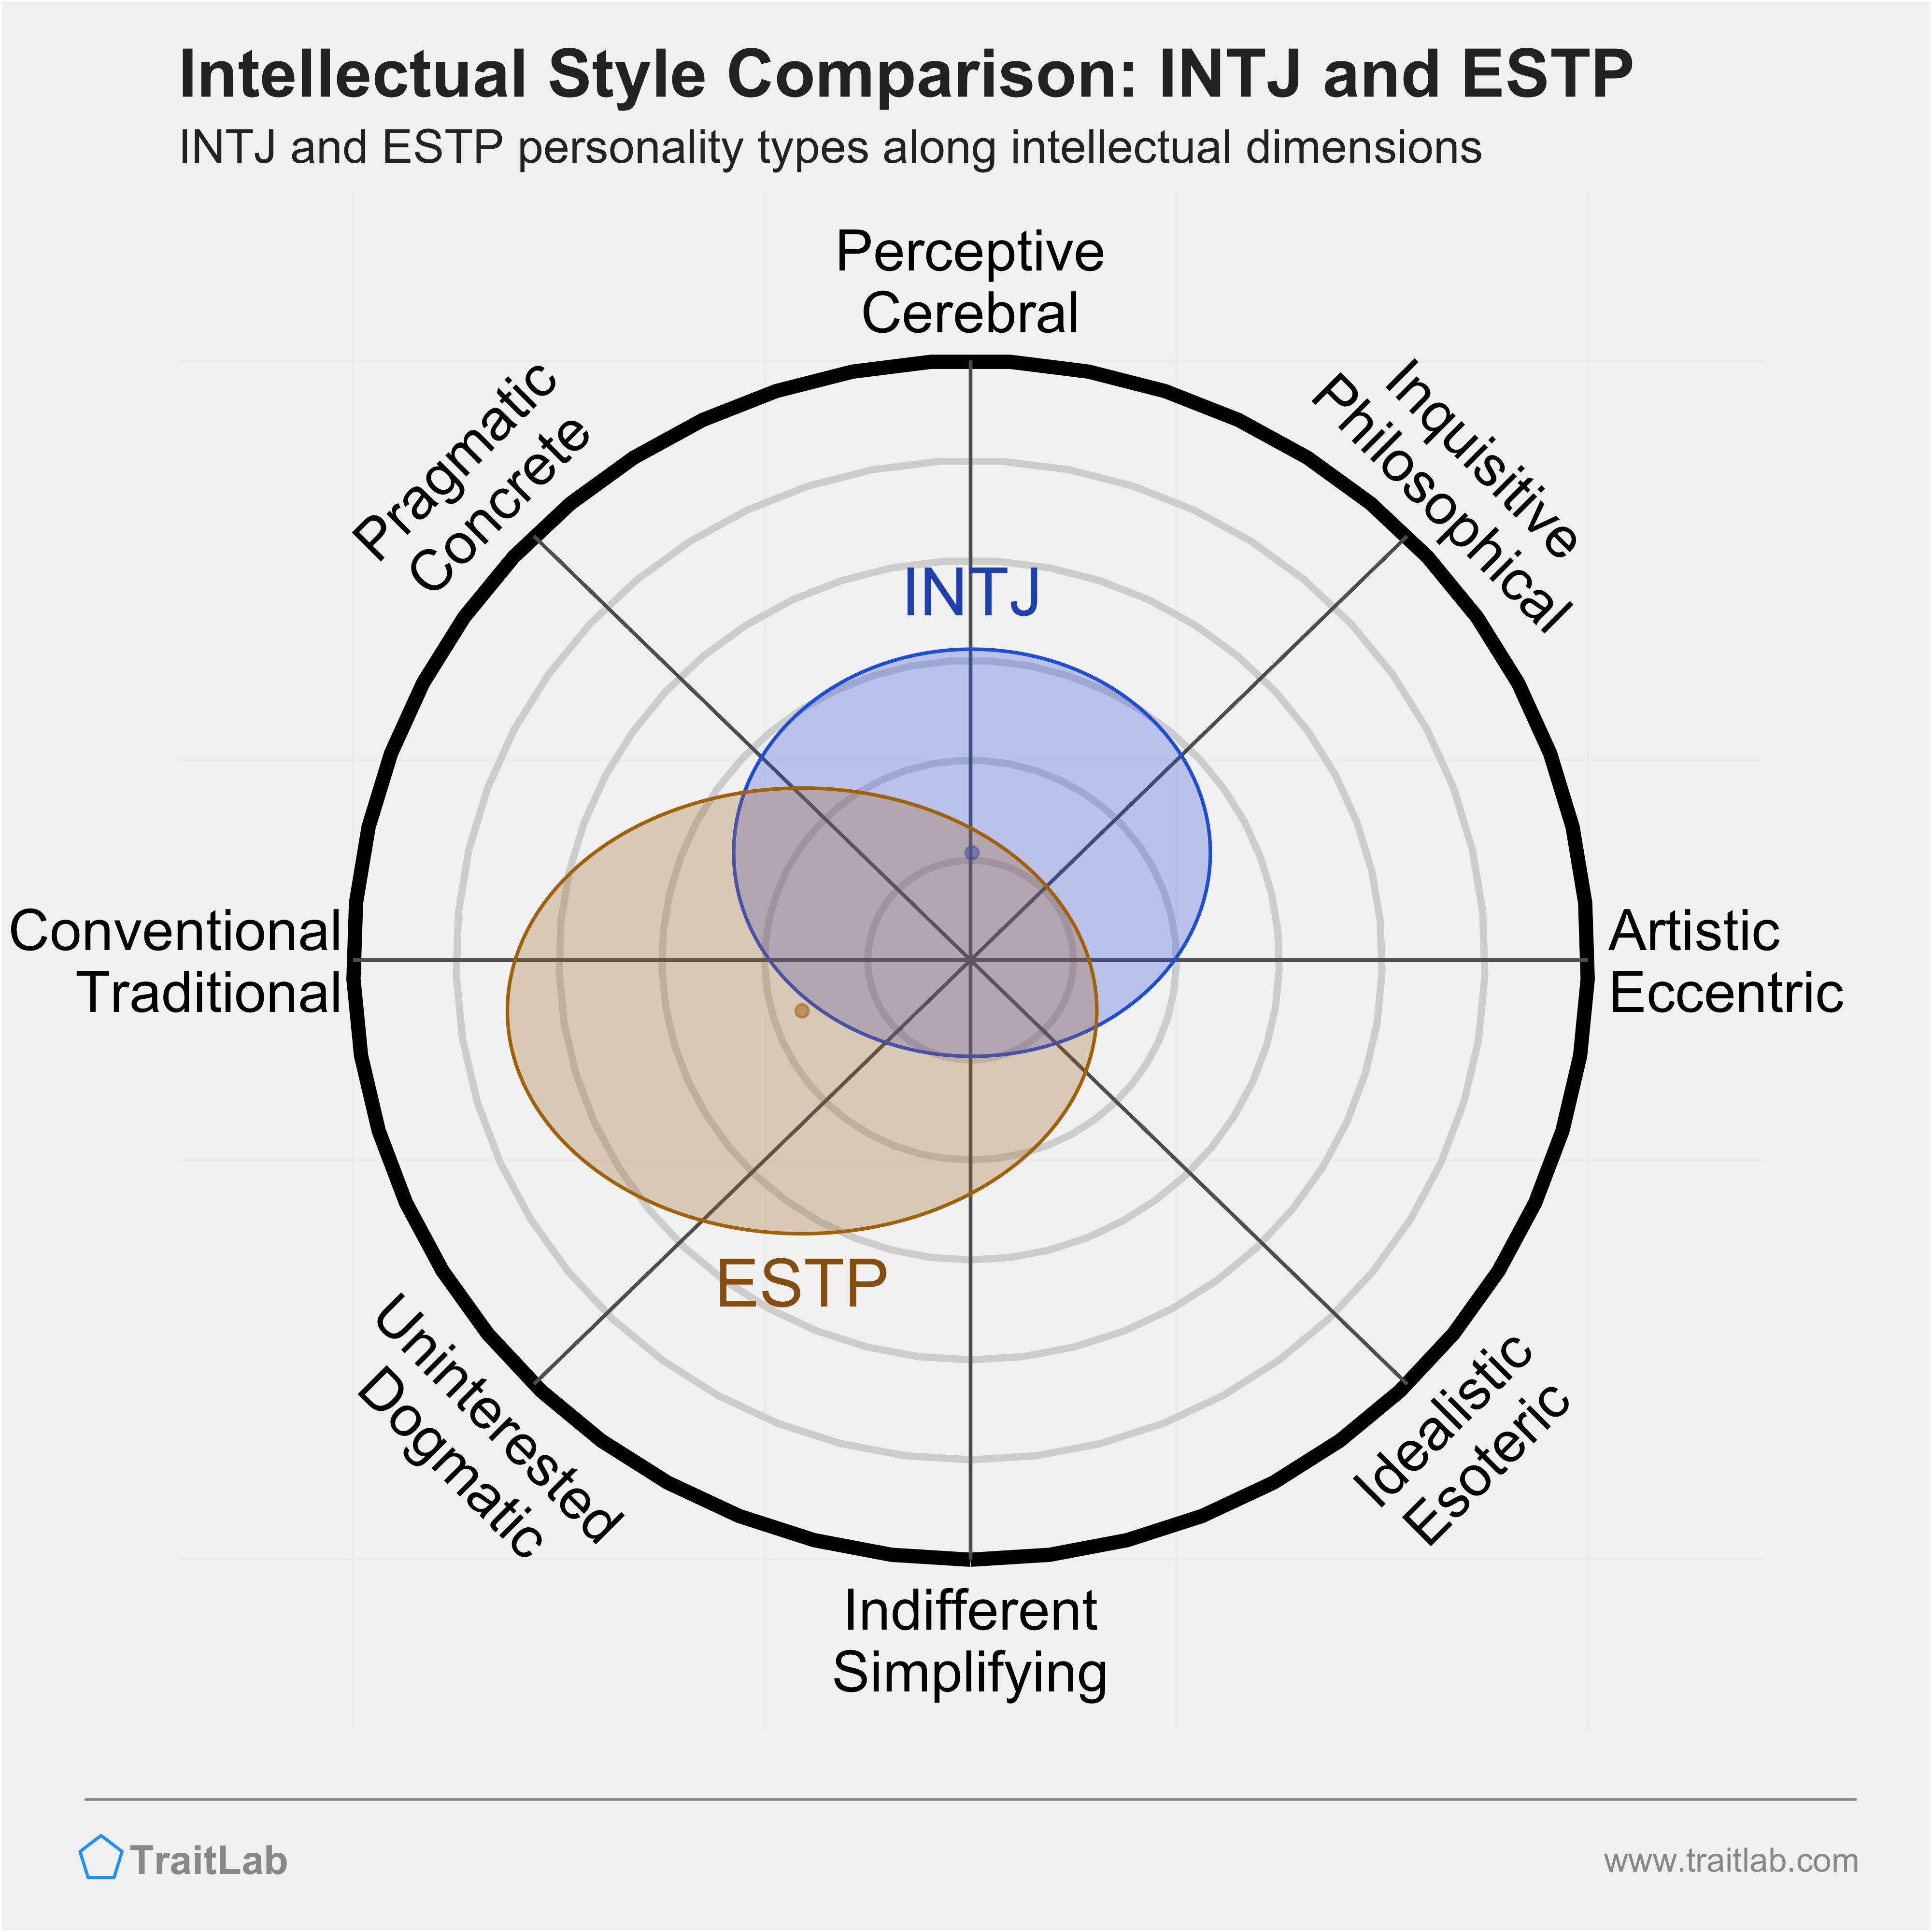 INTJ and ESTP comparison across intellectual dimensions